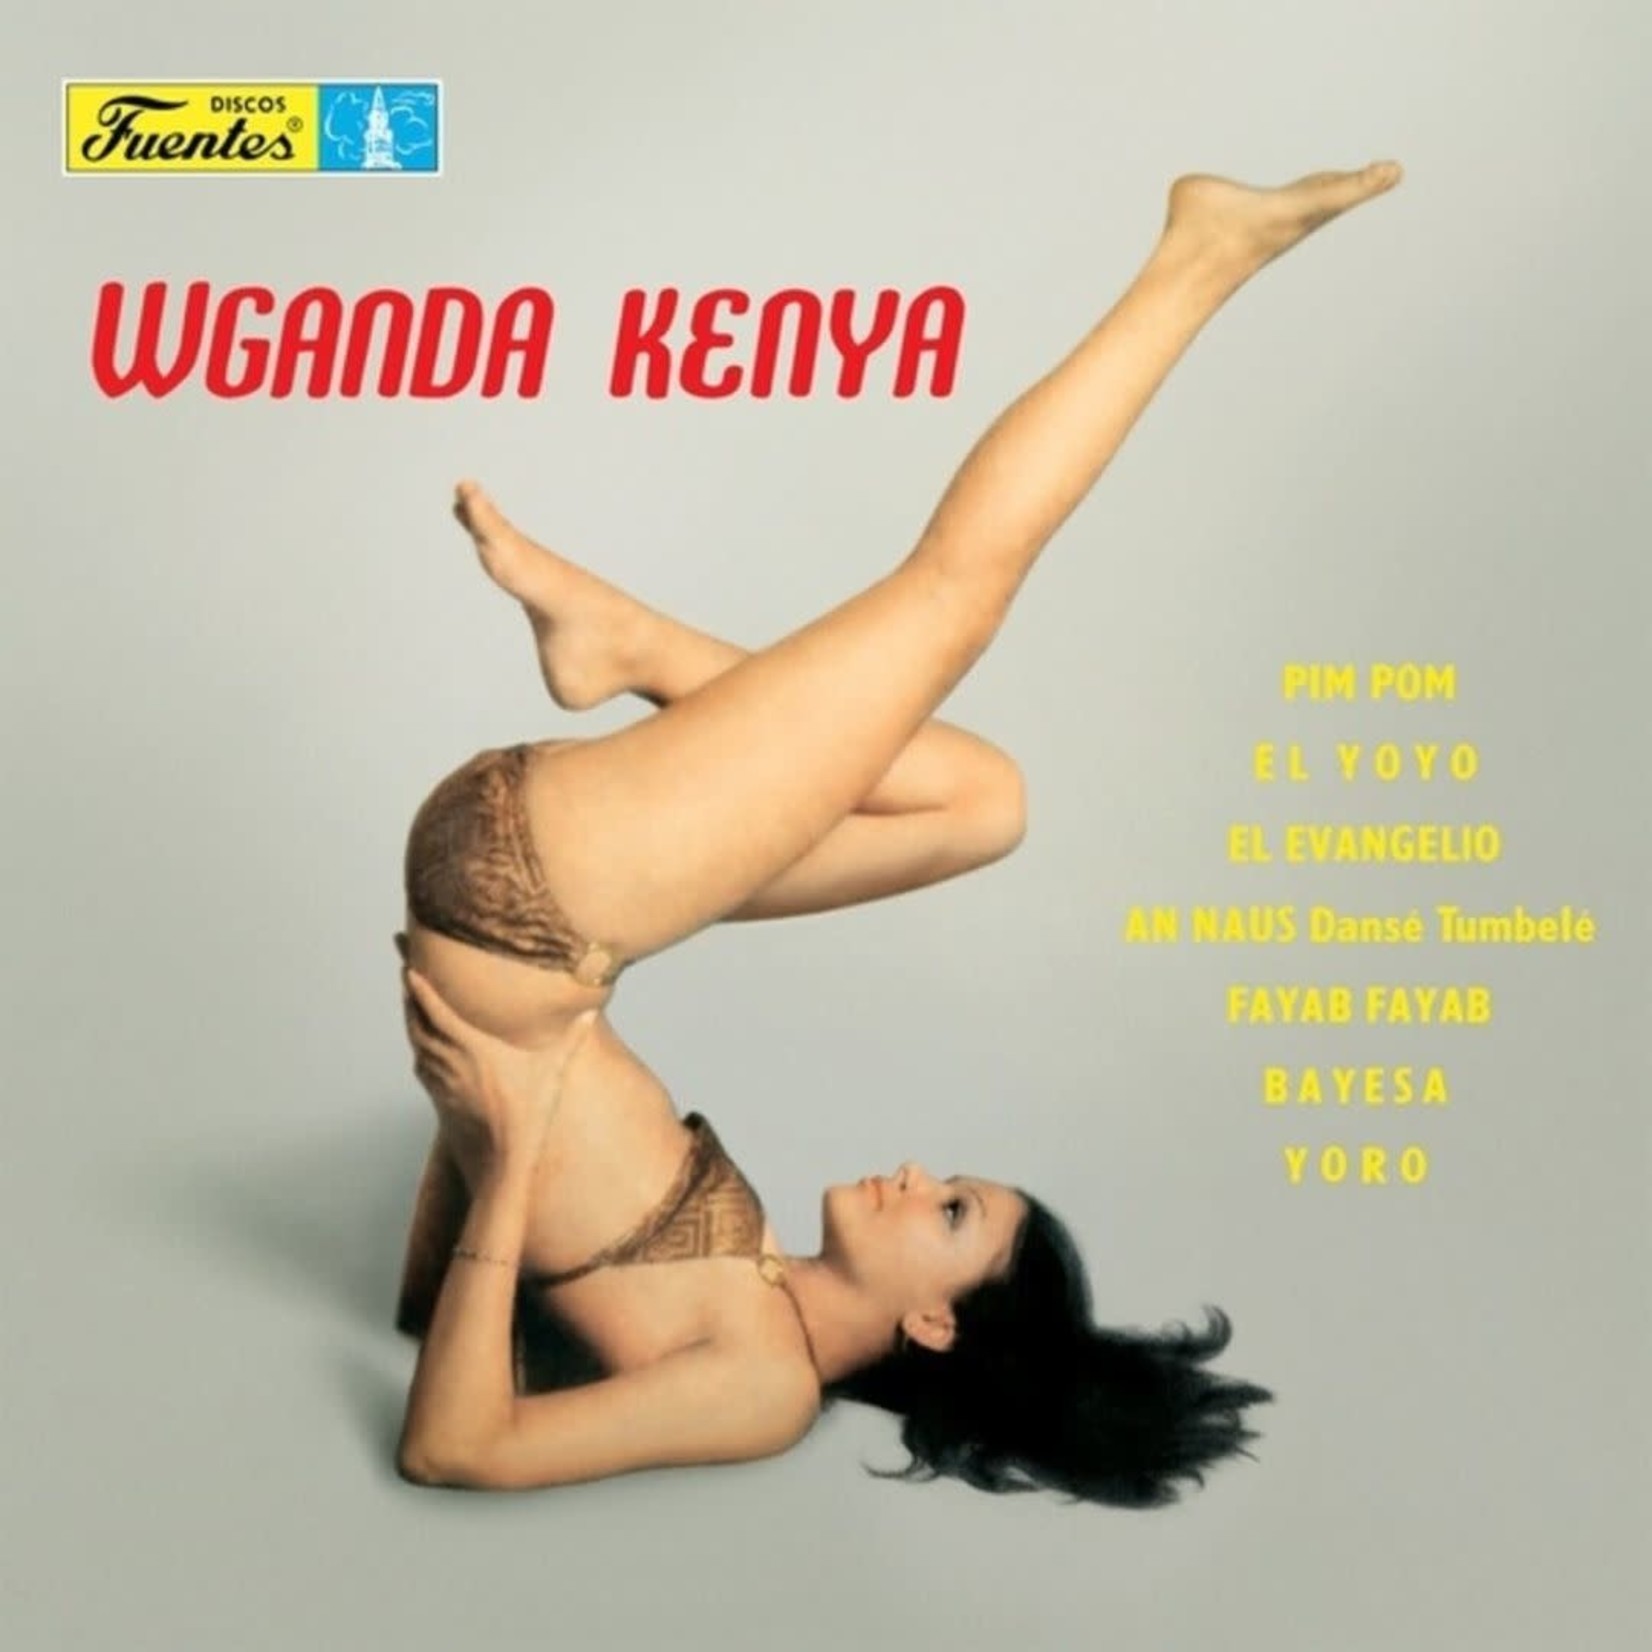 [New] Wganda Kenya - Wganda Kenya